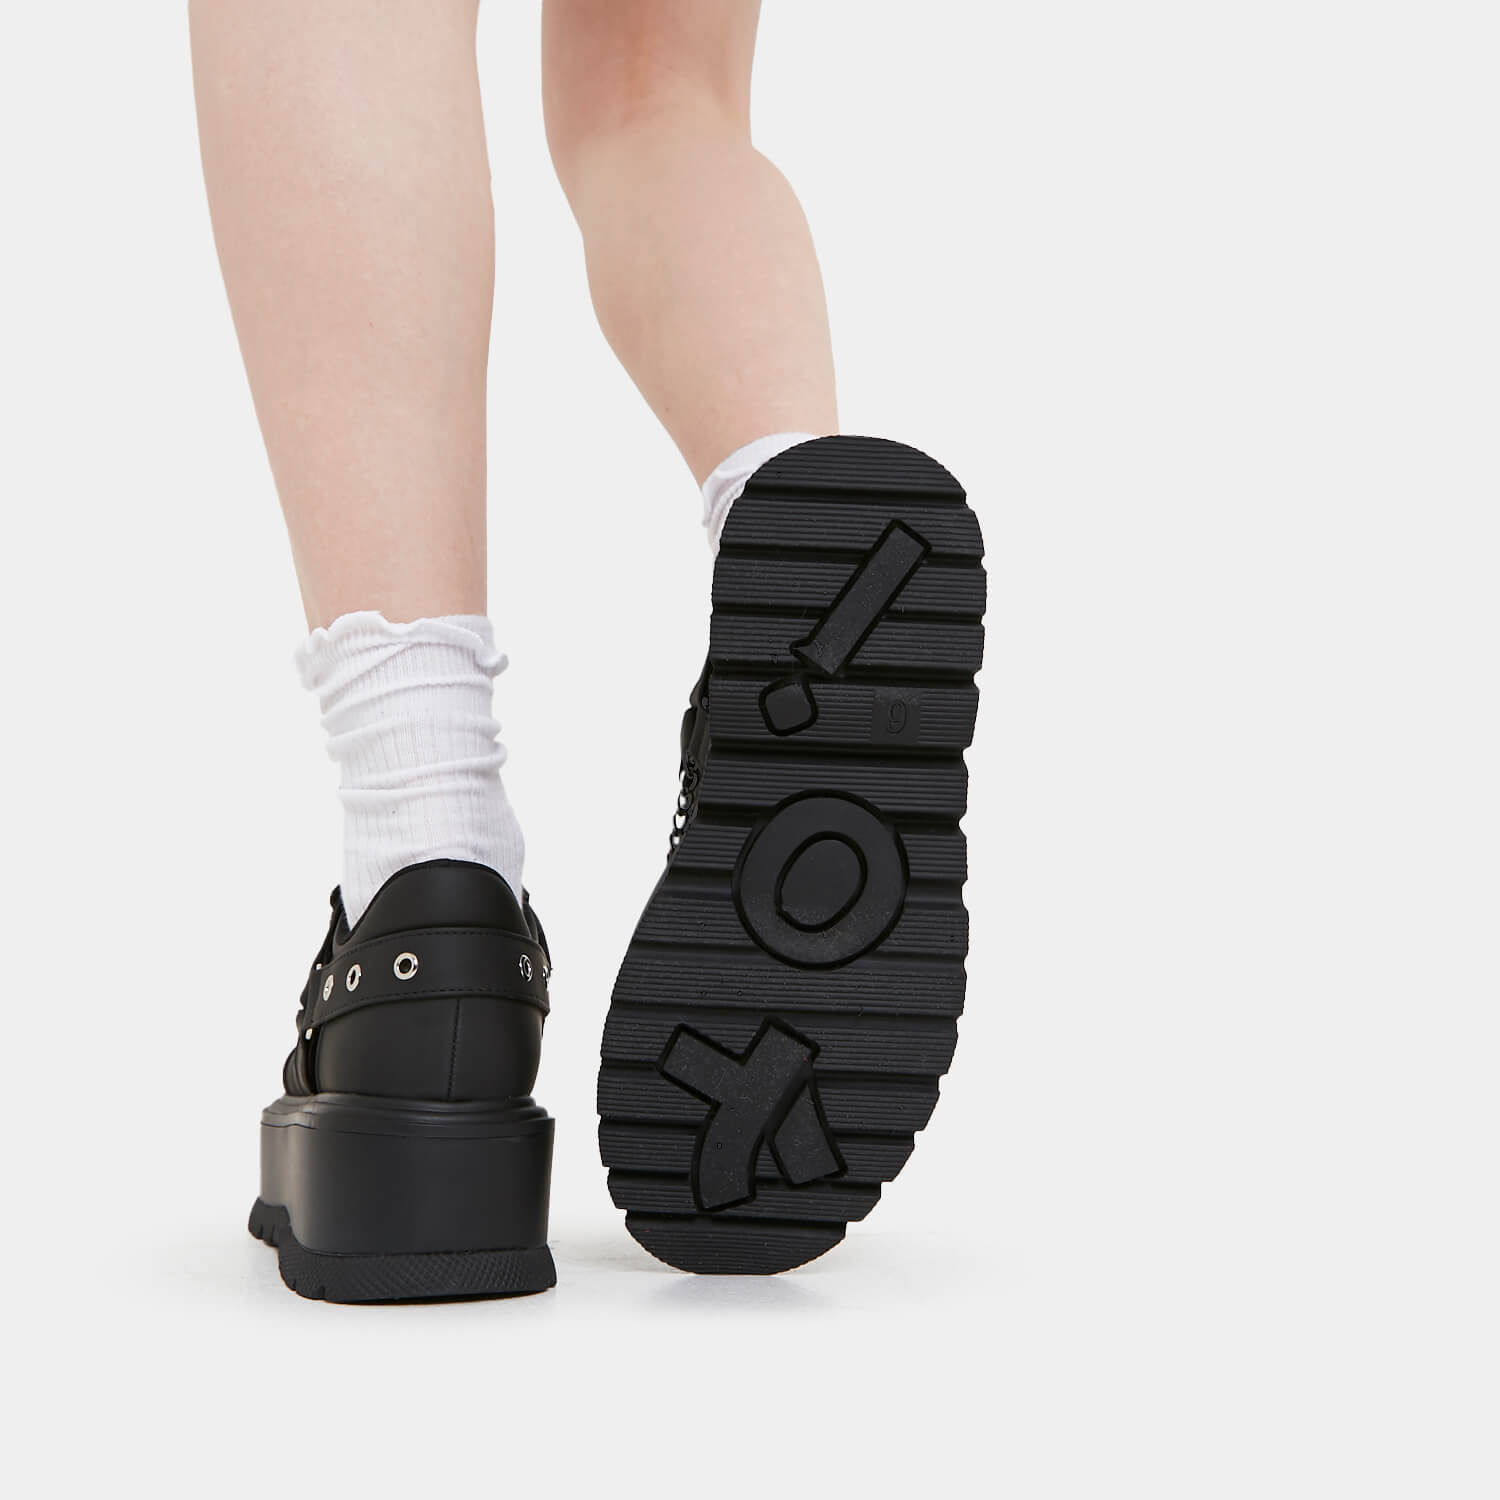 Retrograde Rebel Black Platform Shoes - Shoes - KOI Footwear - Black - Sole Detail